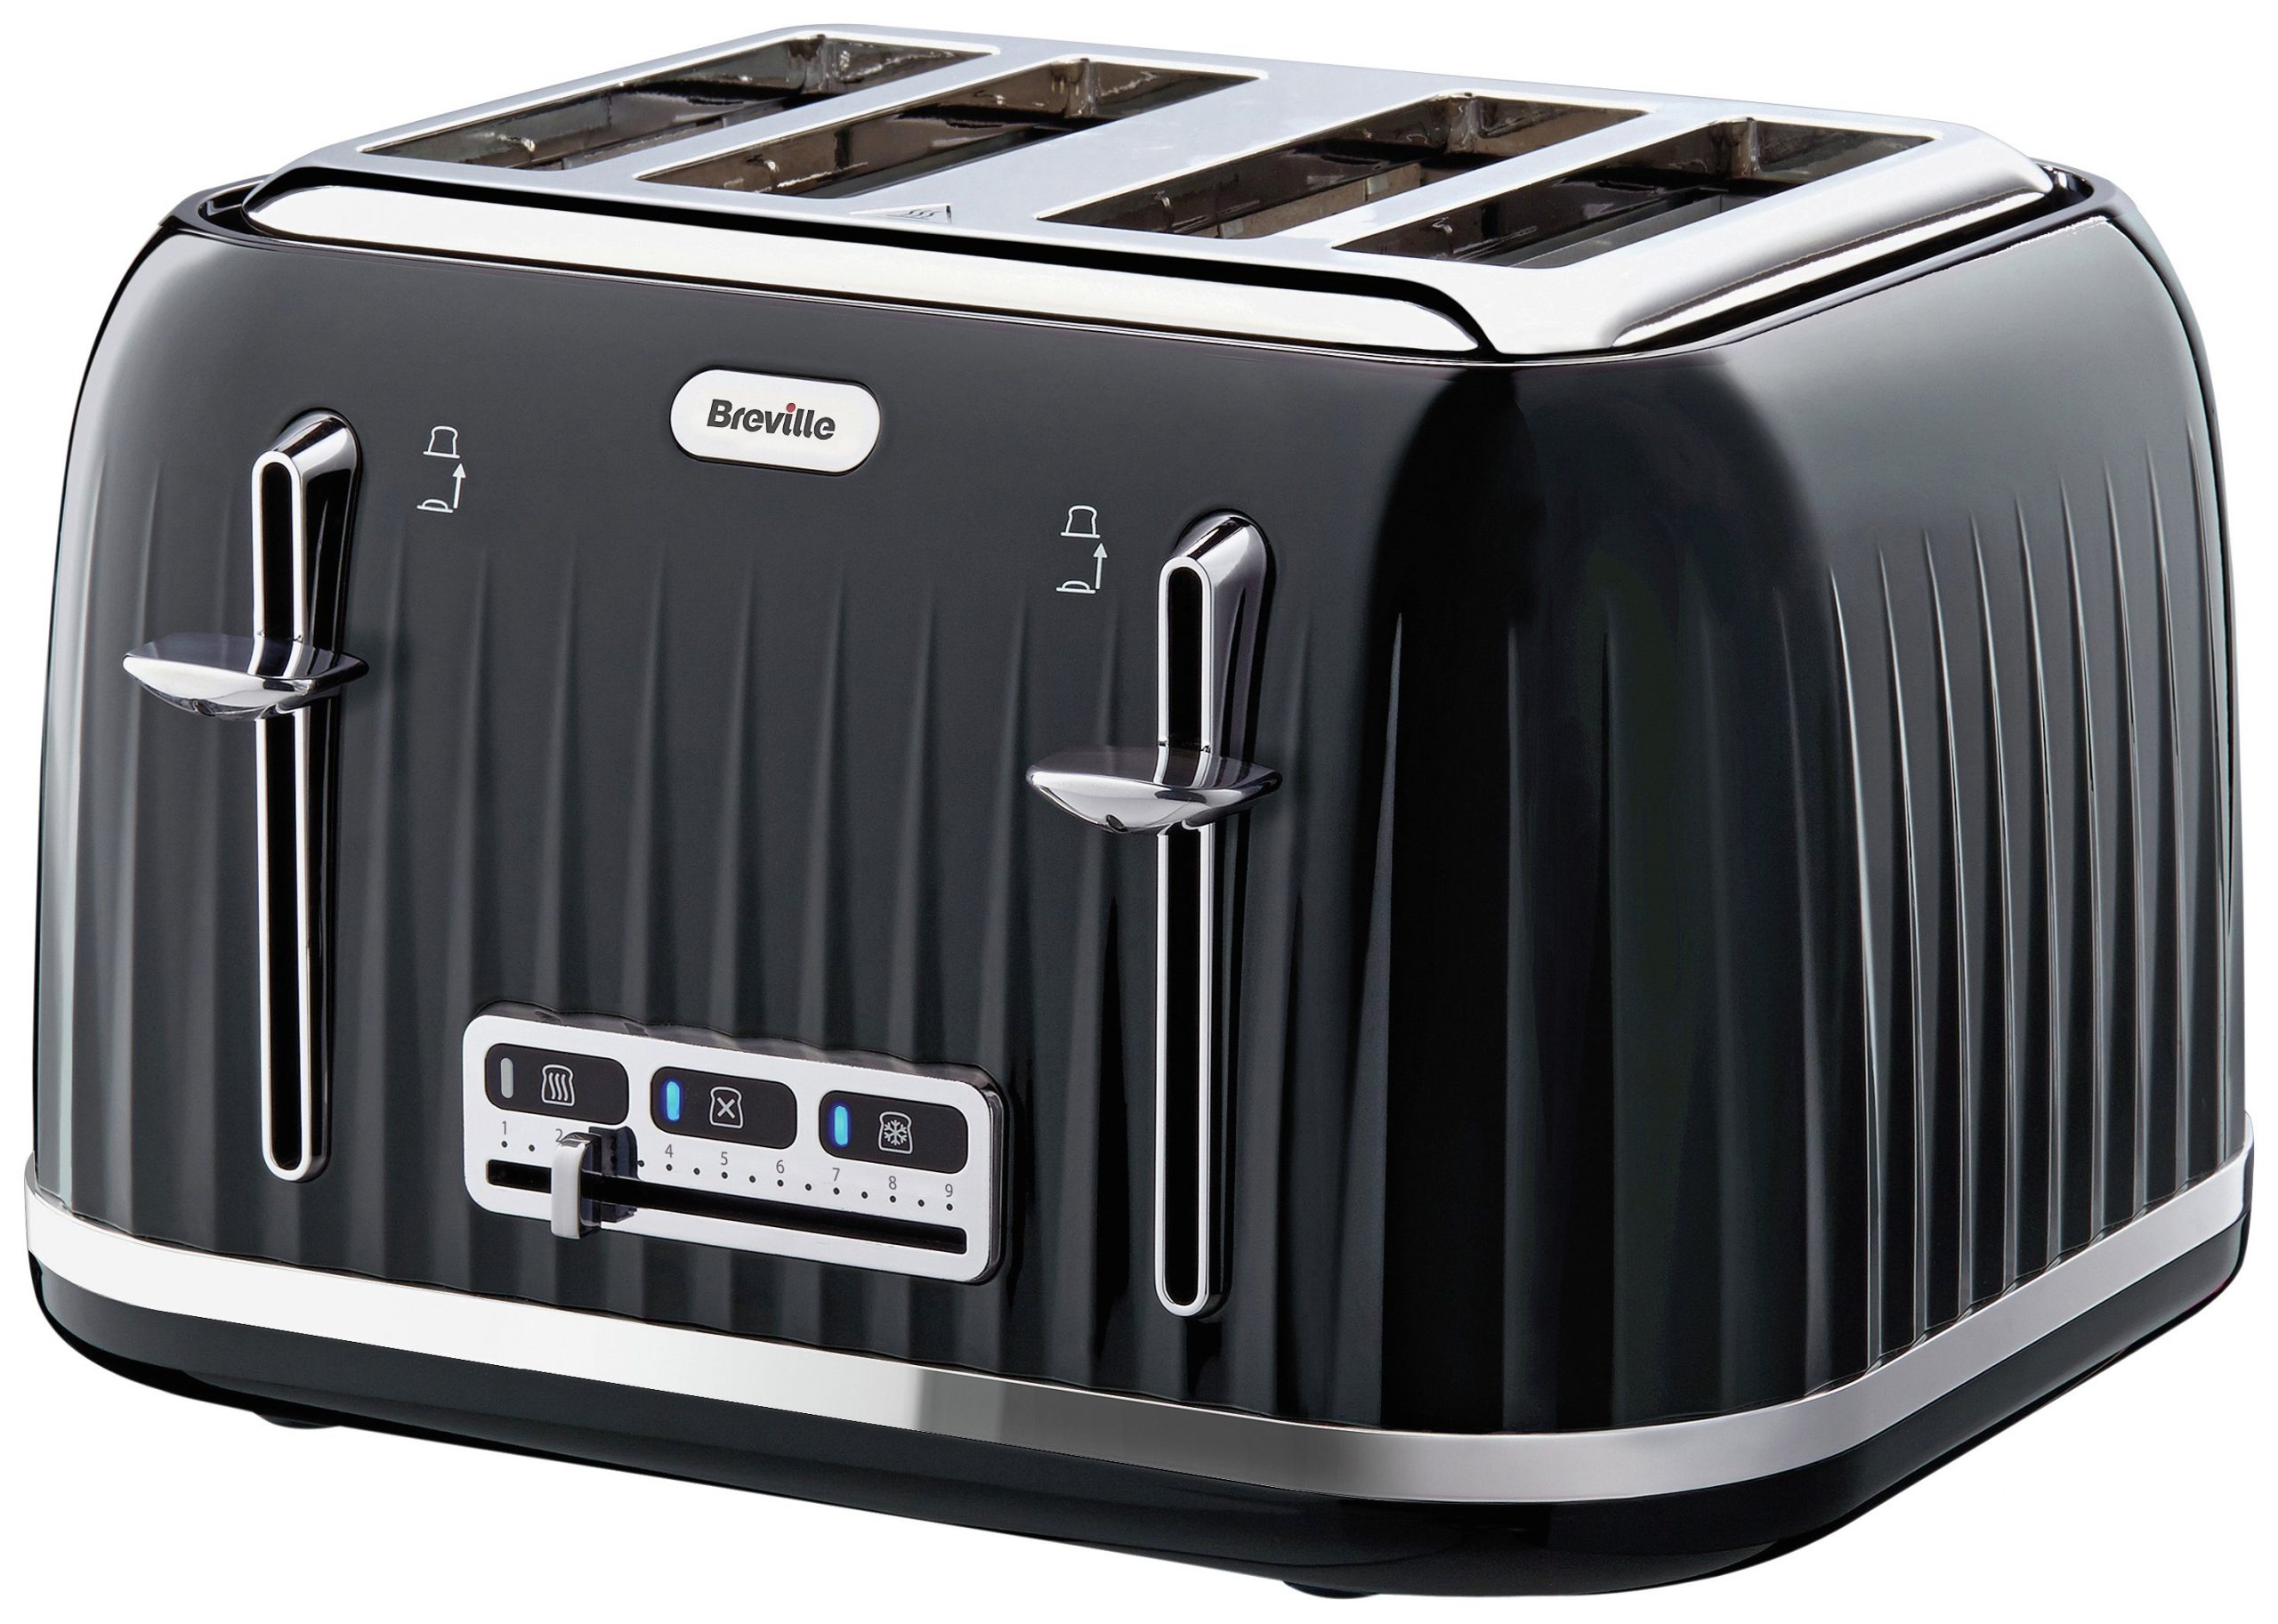 Breville VTT549 4 Slice Toaster in Polished Stainless Steel